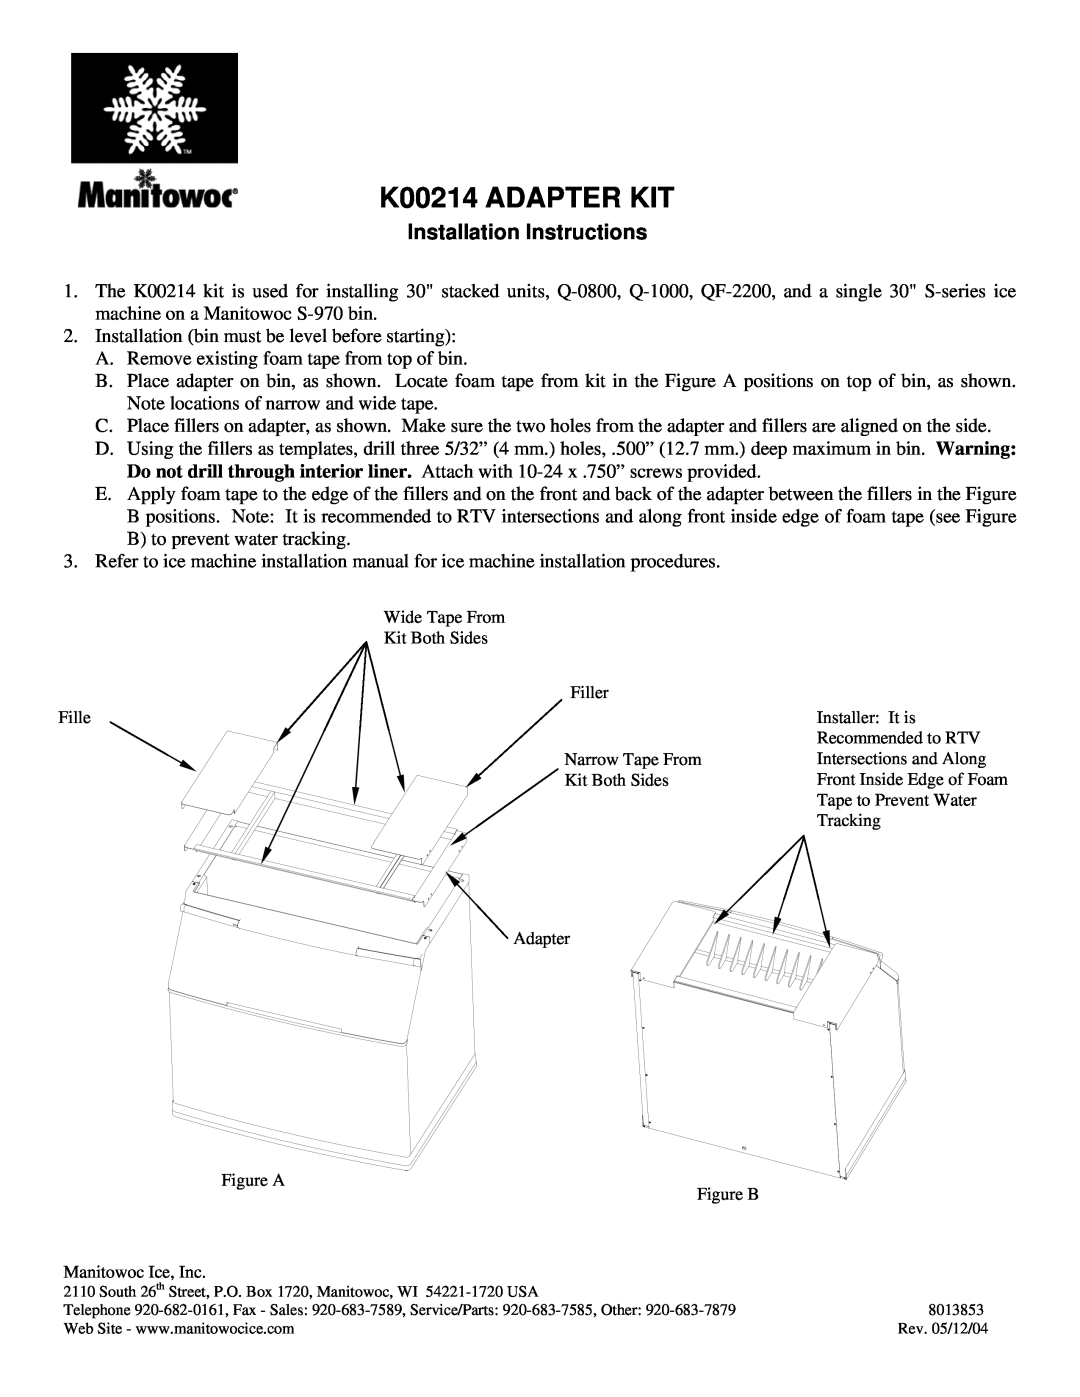 Manitowoc Ice installation instructions K00214 ADAPTER KIT, Installation Instructions 